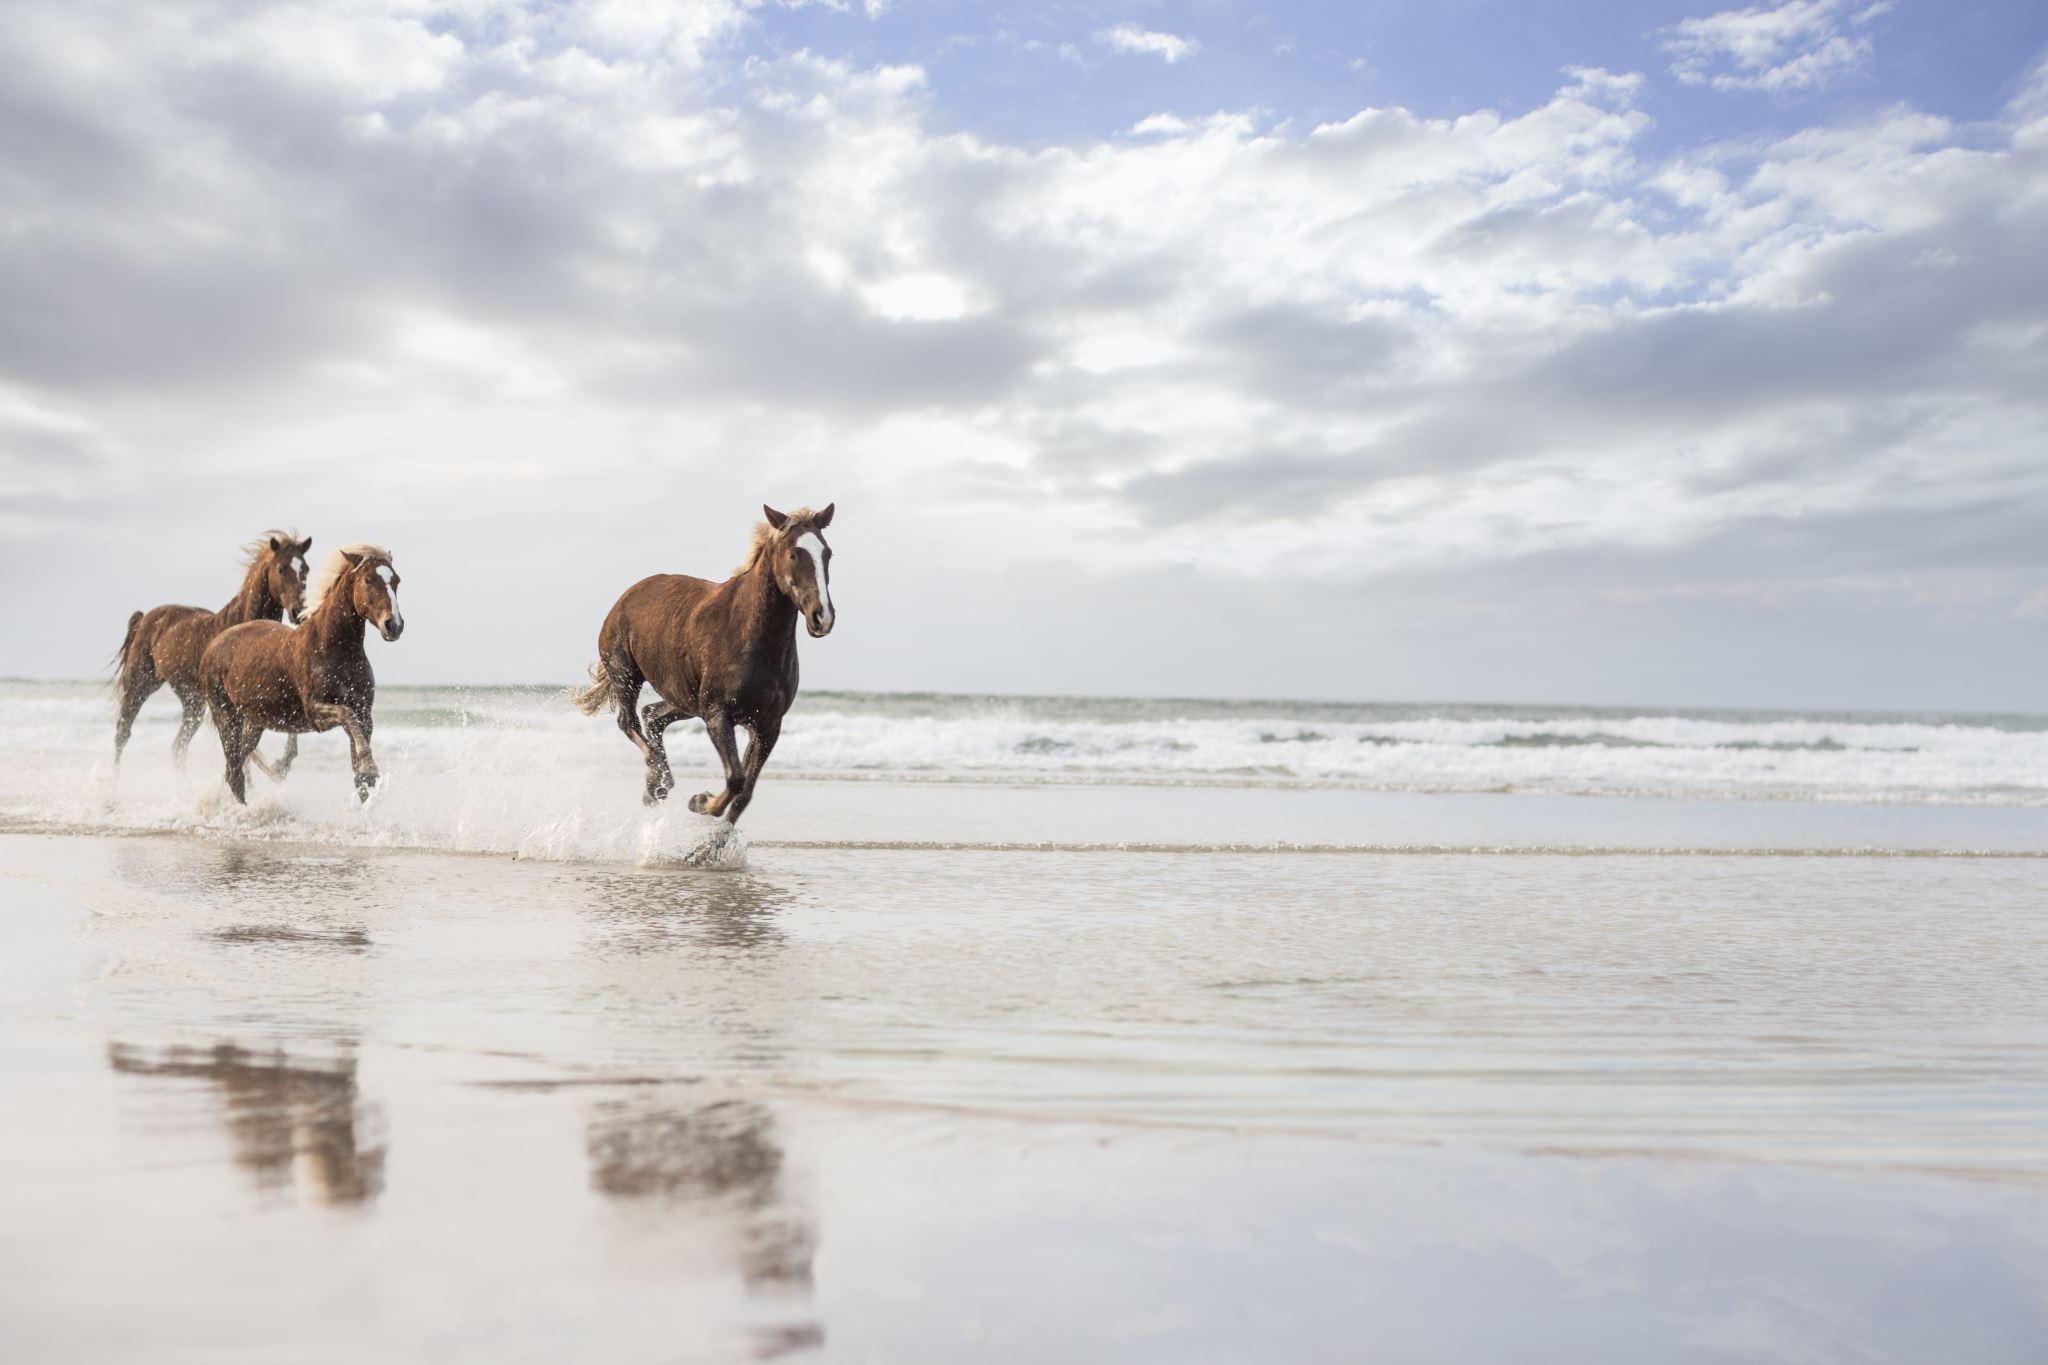 Brown horses running on a beach